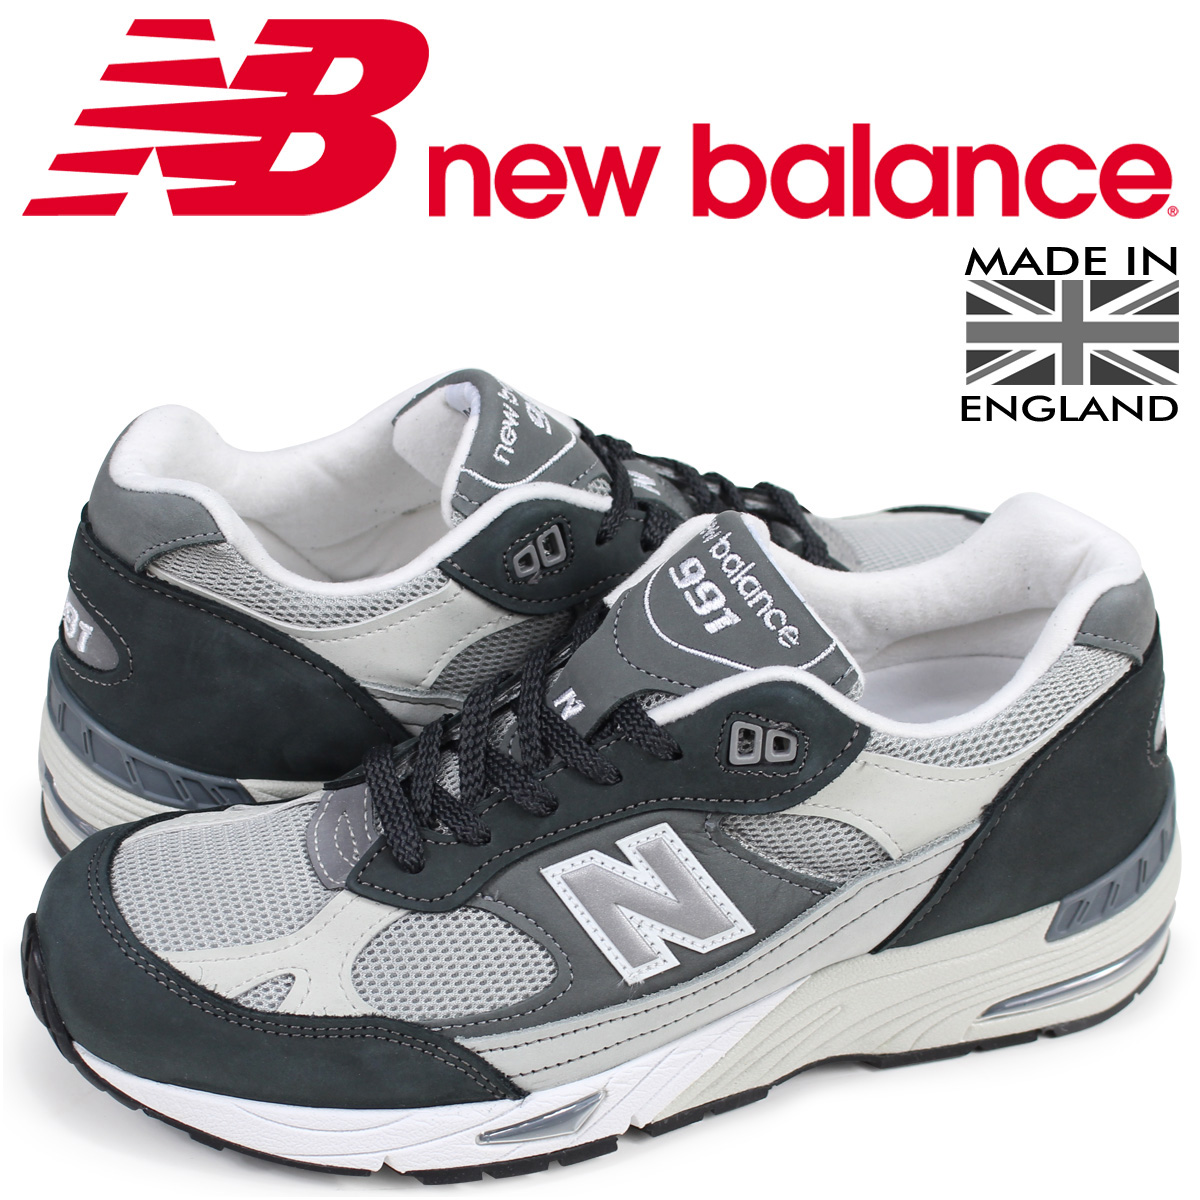 new balance 991 shop online uk